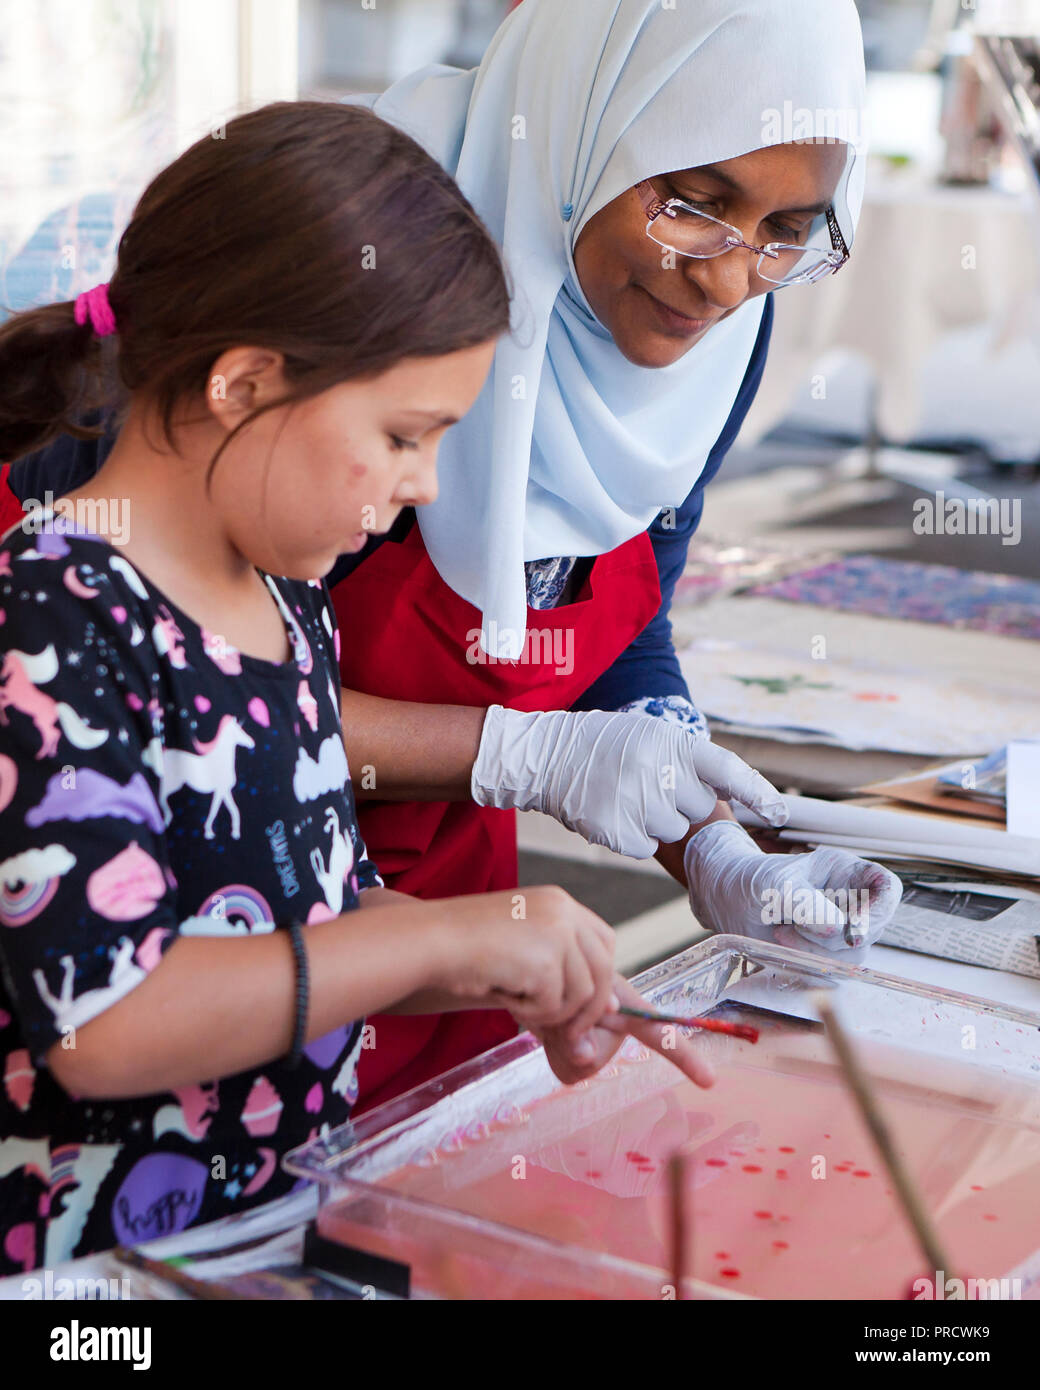 Muslim woman helping schoolgirl with art project - USA Stock Photo